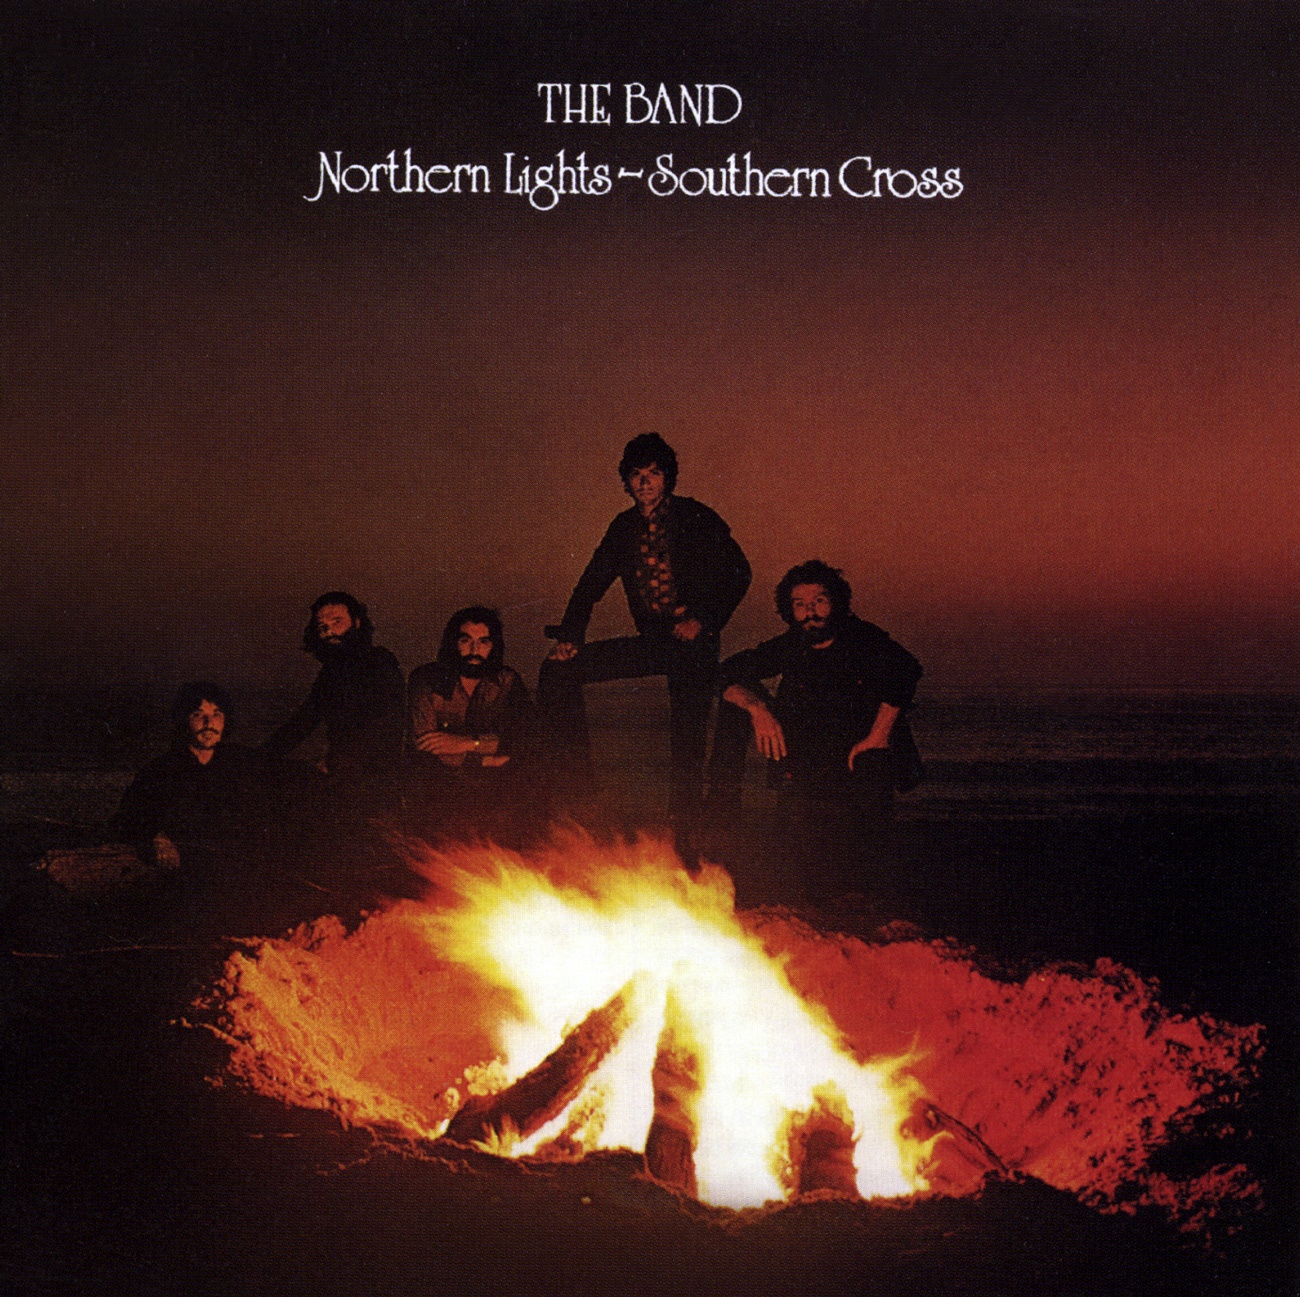 Northern Lights-Southern Cross